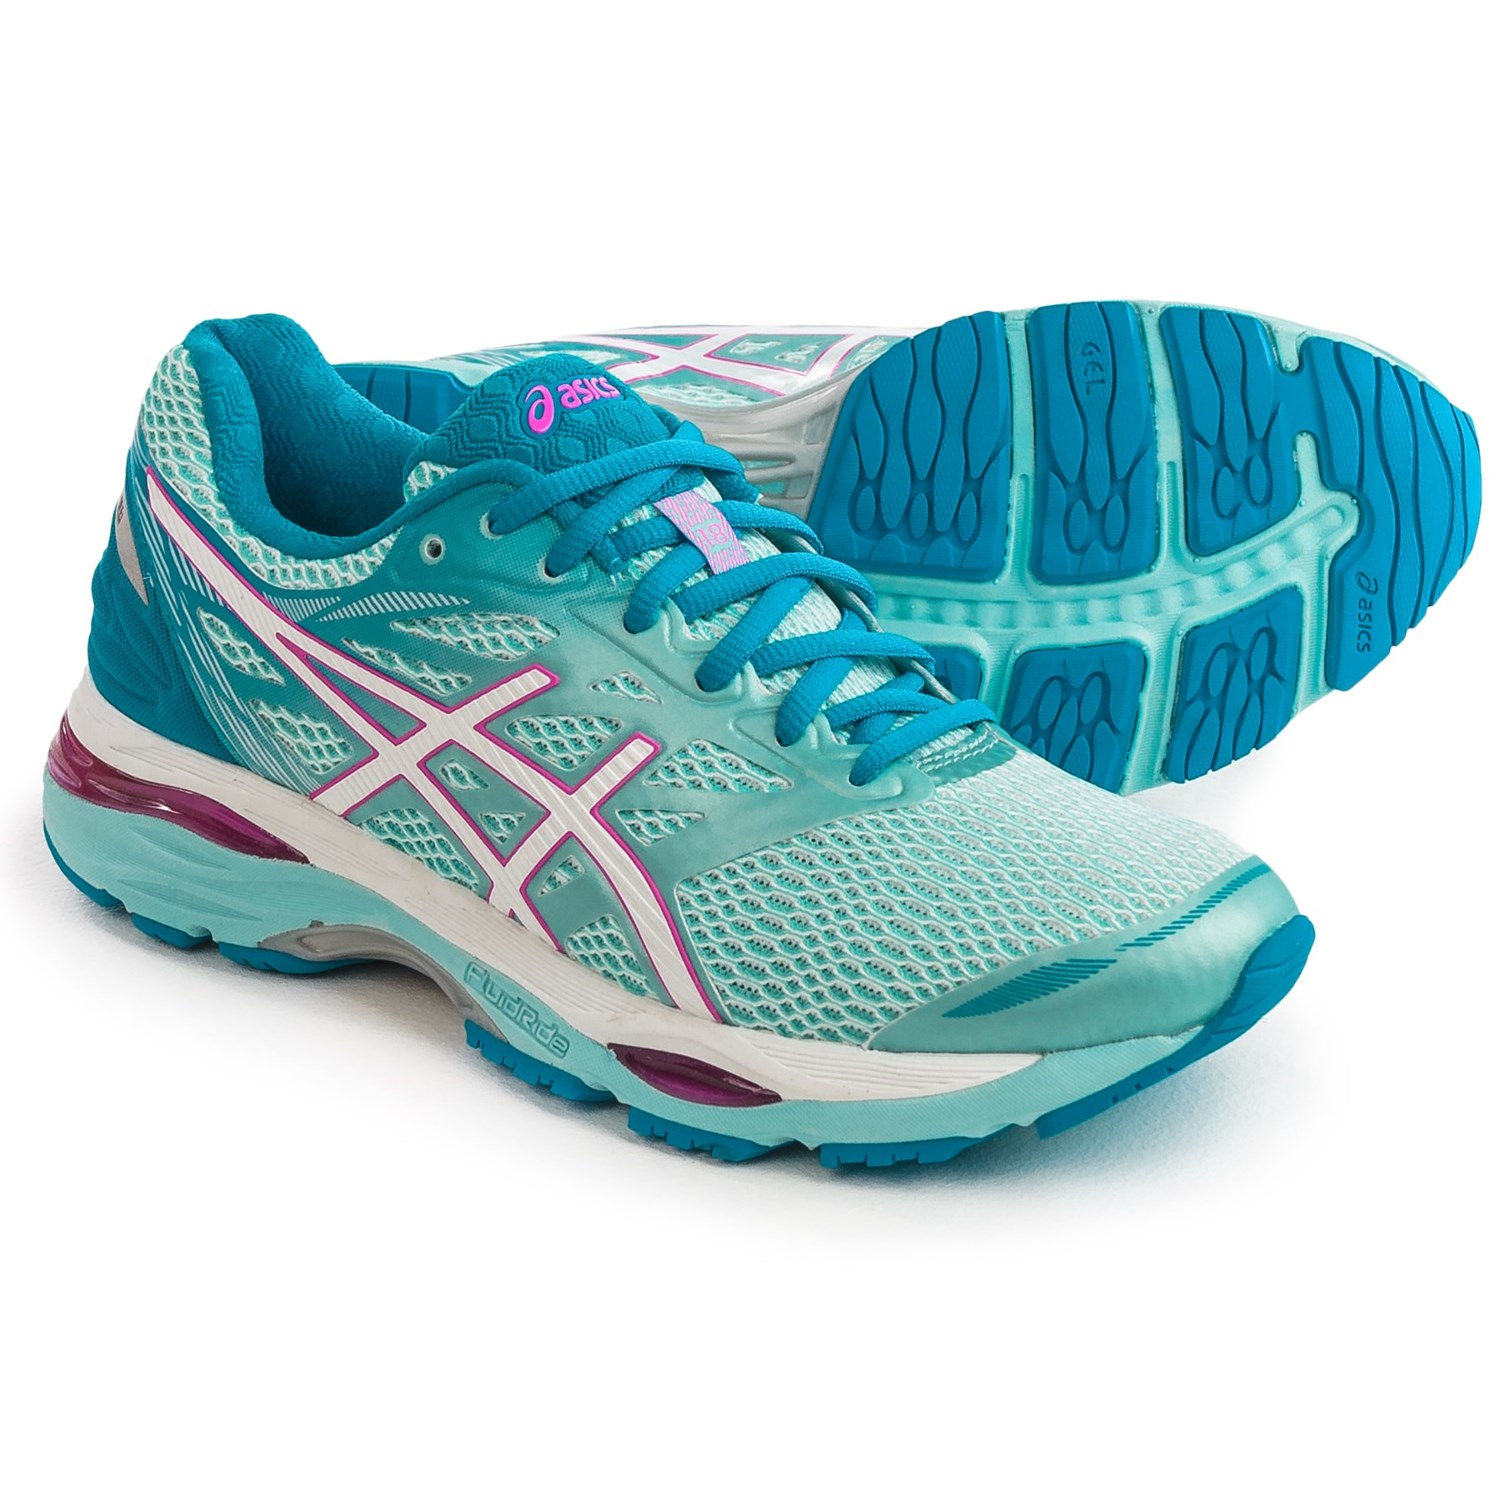 ASICS GEL-Cumulus 18 Running Shoes (For Women) - Save 66%